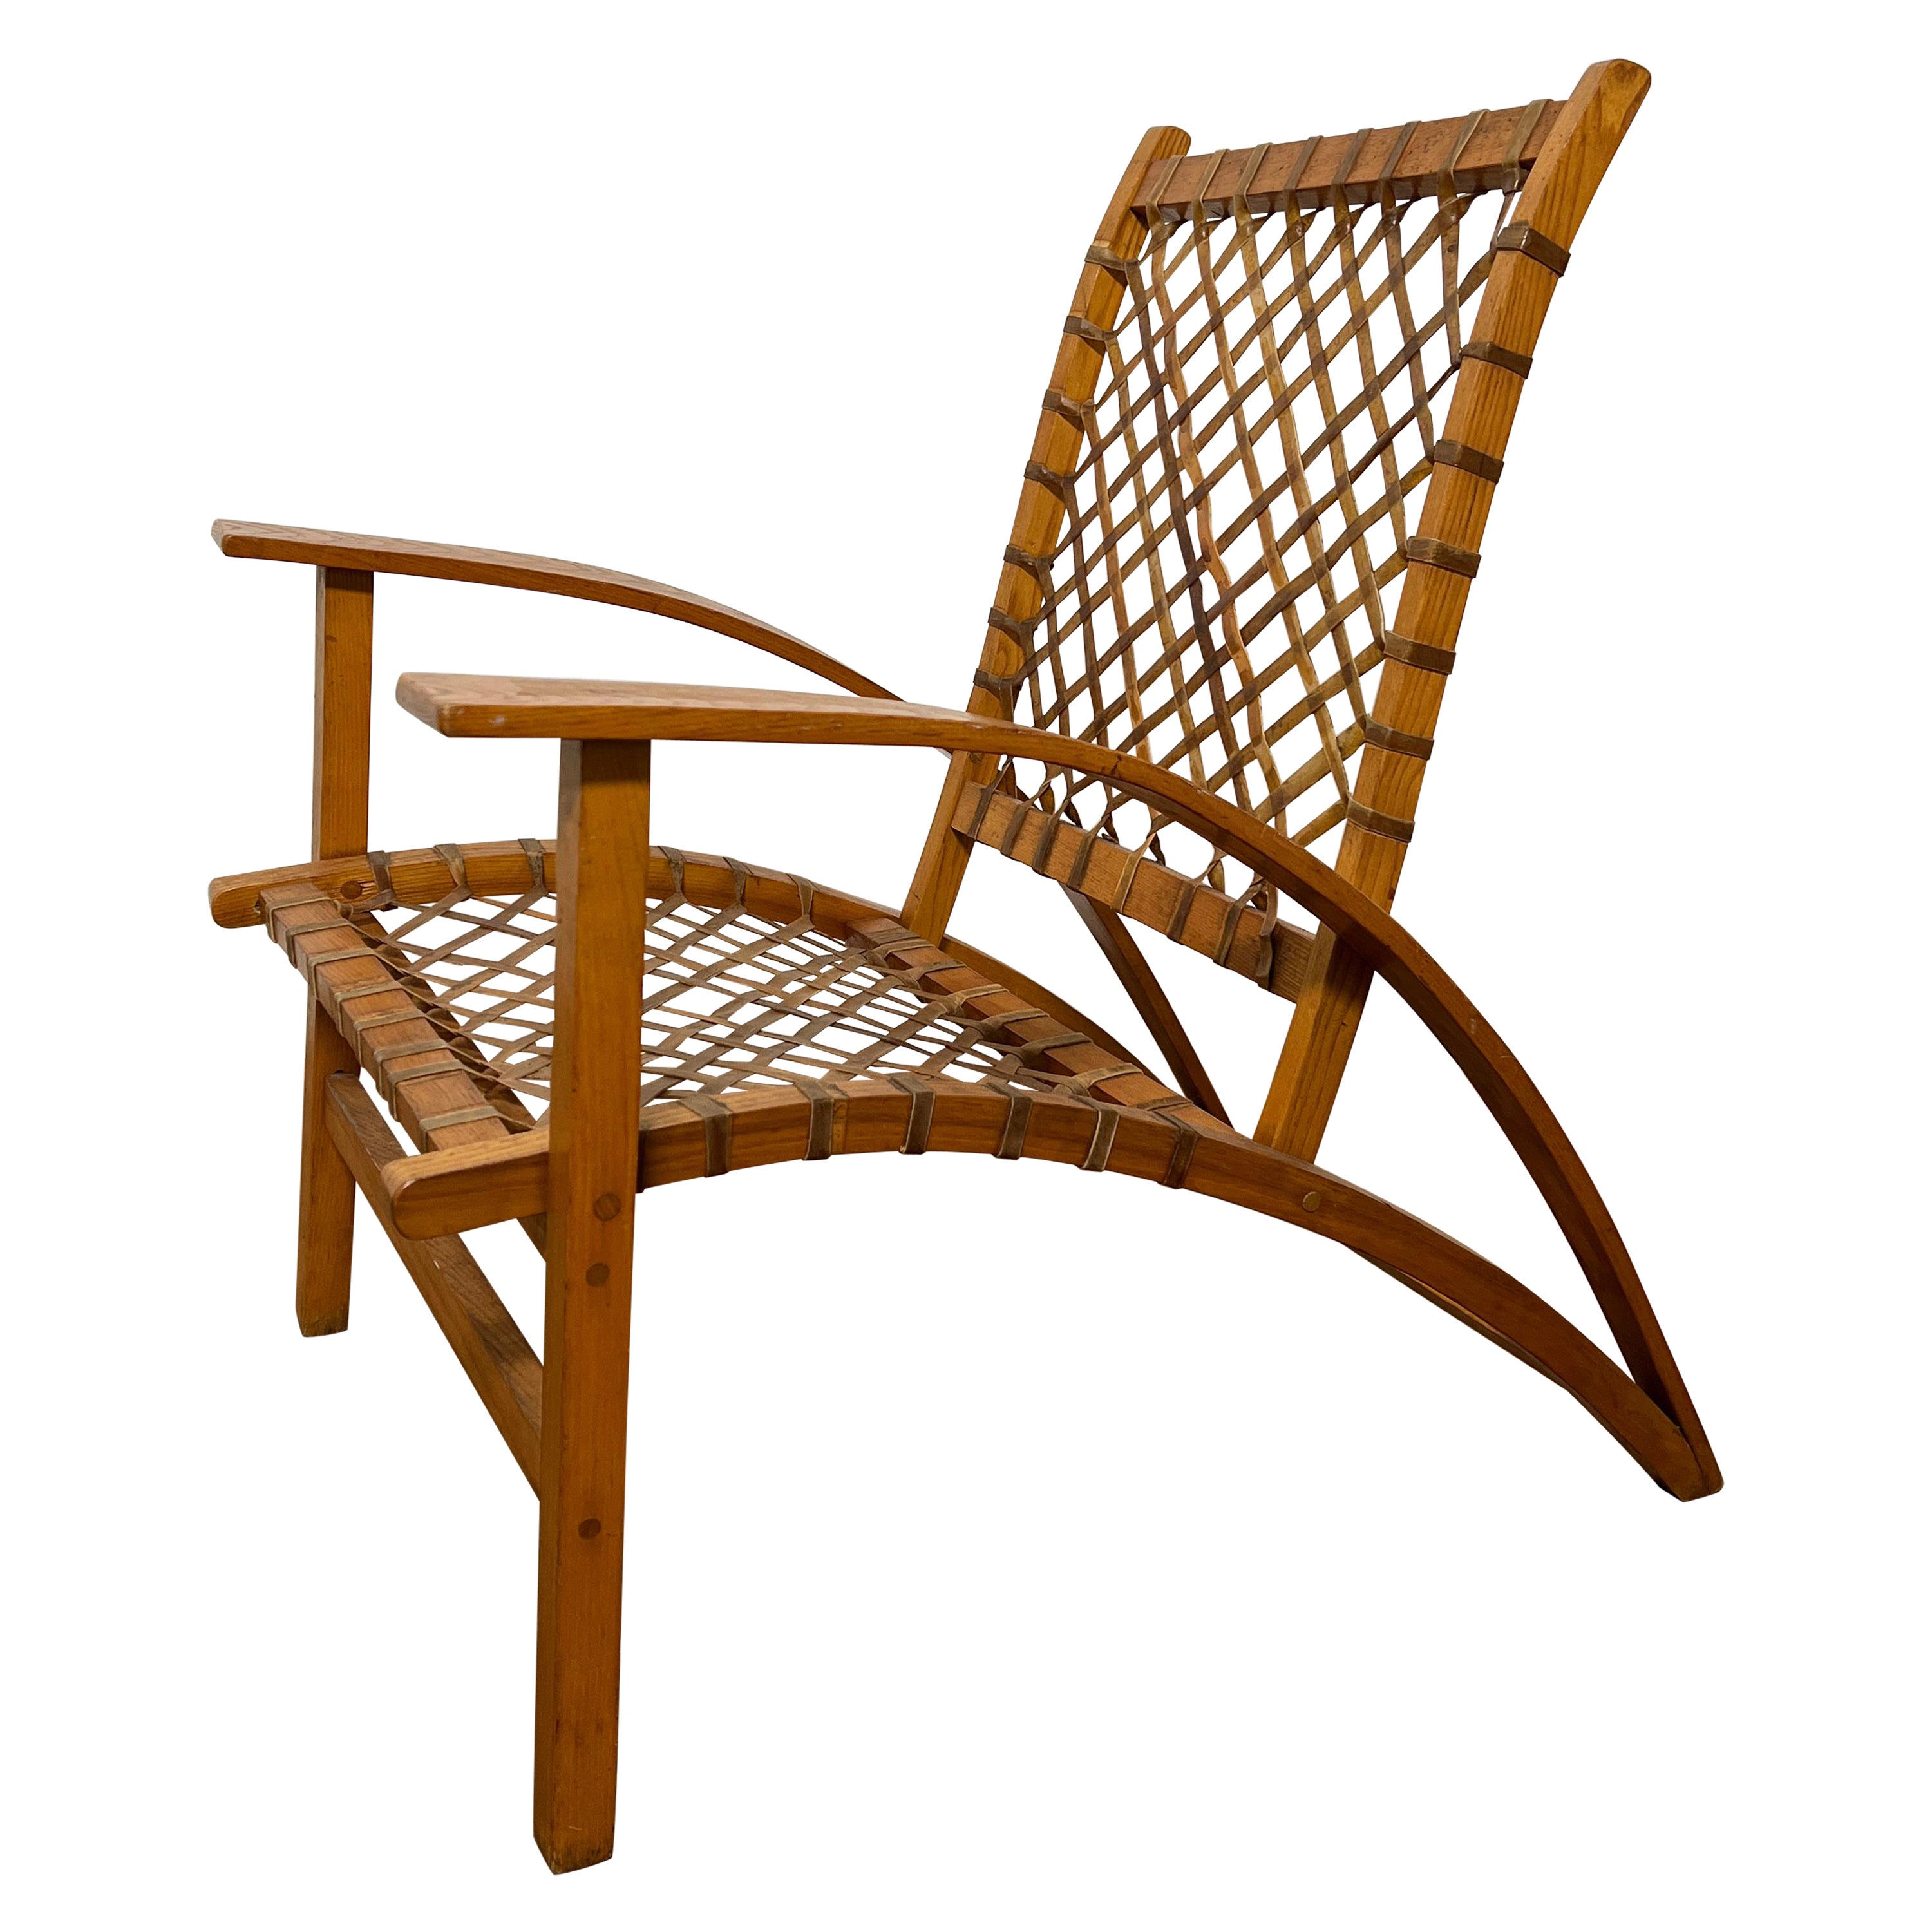 Carl Koch for Vermont Tubbs Sno Shu Chair, Circa 1950s For Sale